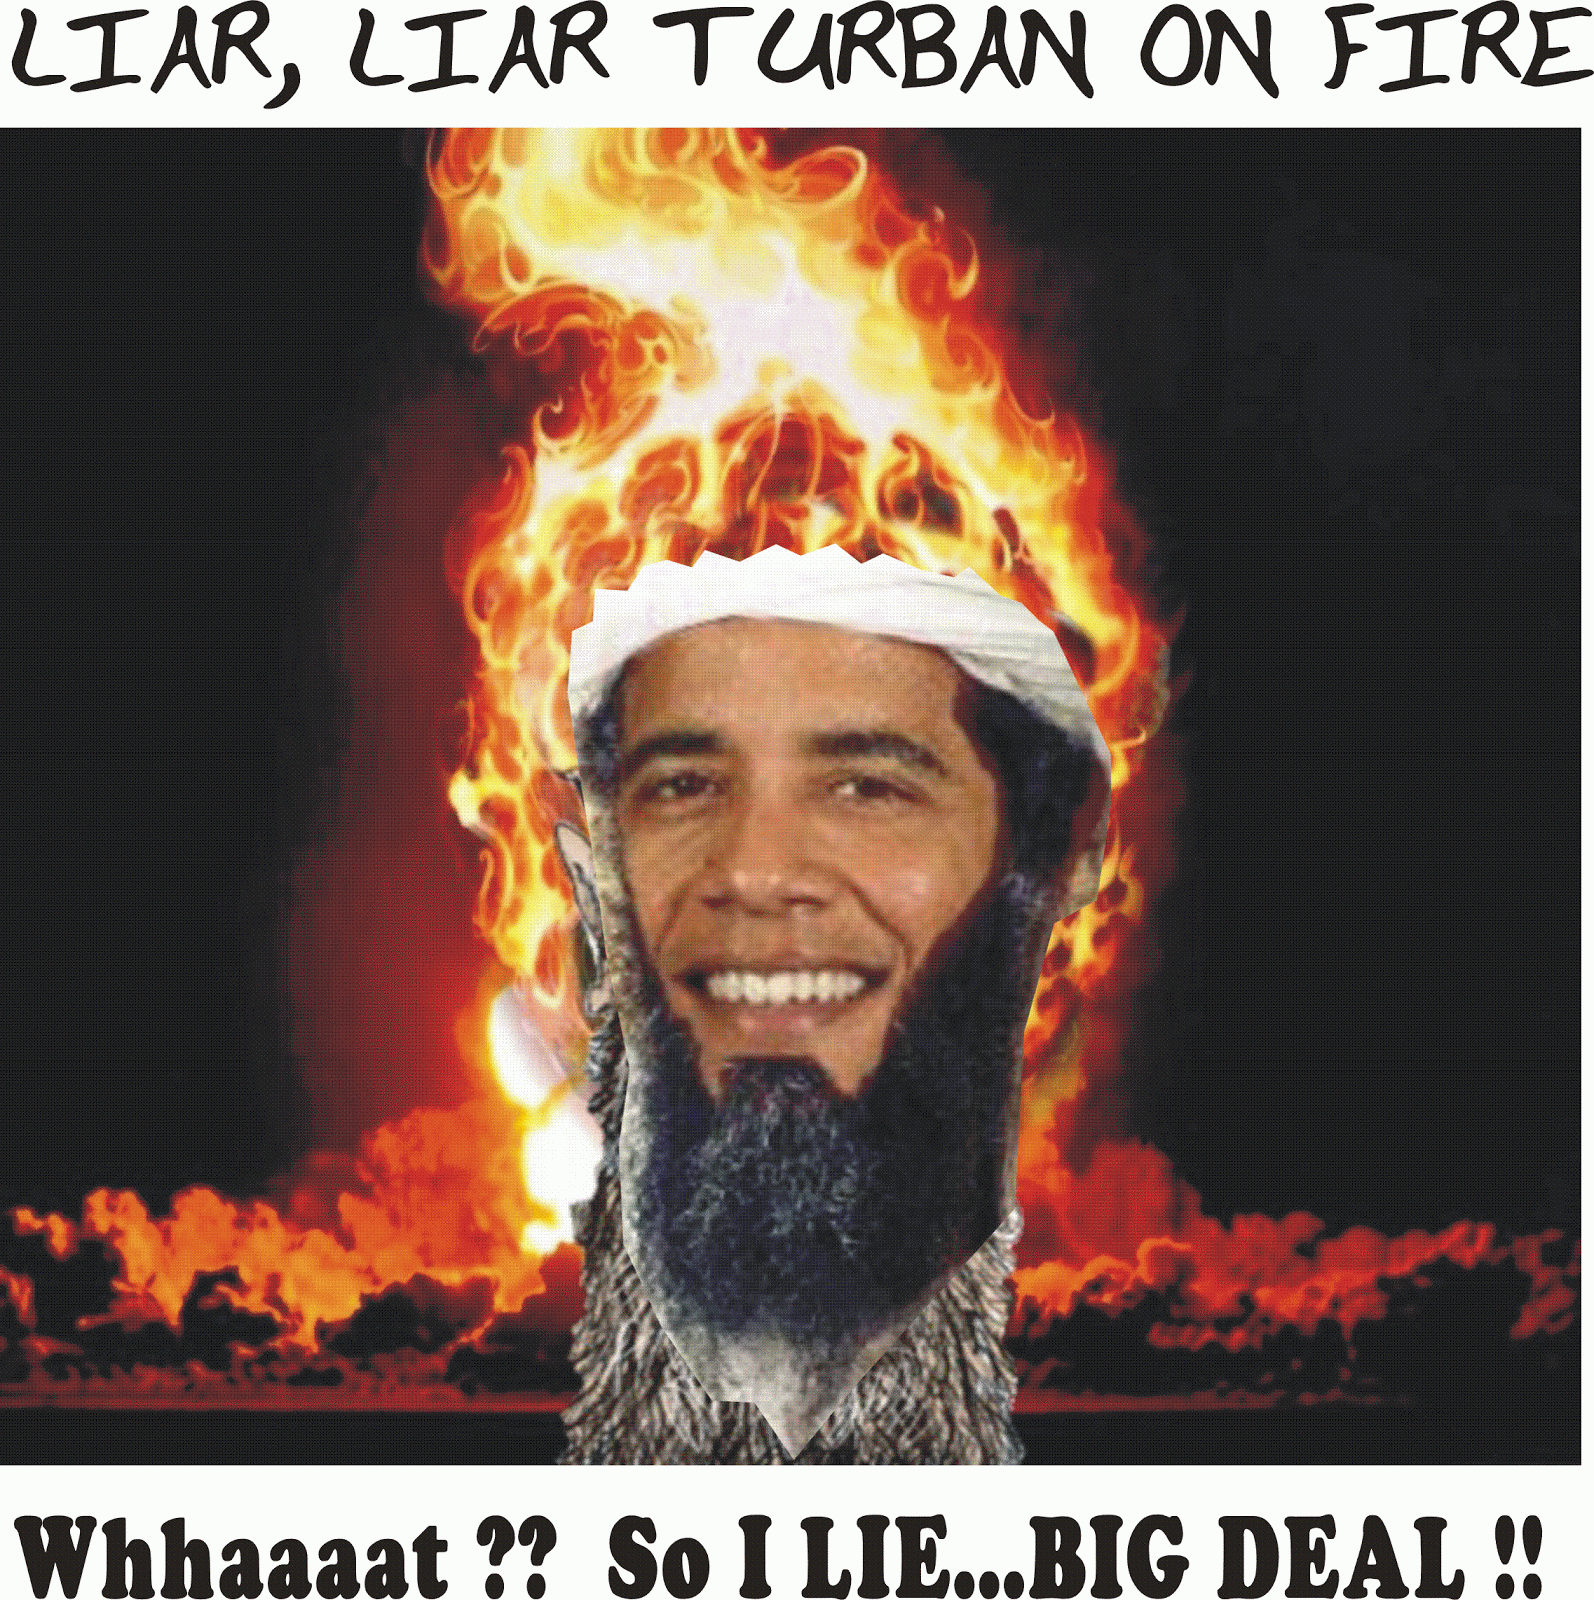 http://4.bp.blogspot.com/-29arEyq-oJc/UGYLCz_VKPI/AAAAAAAAB8A/jUb3PKbztoM/s1600/liar+liar+turban+on+fire.gif#liar%20obama%20gif%201594x1600